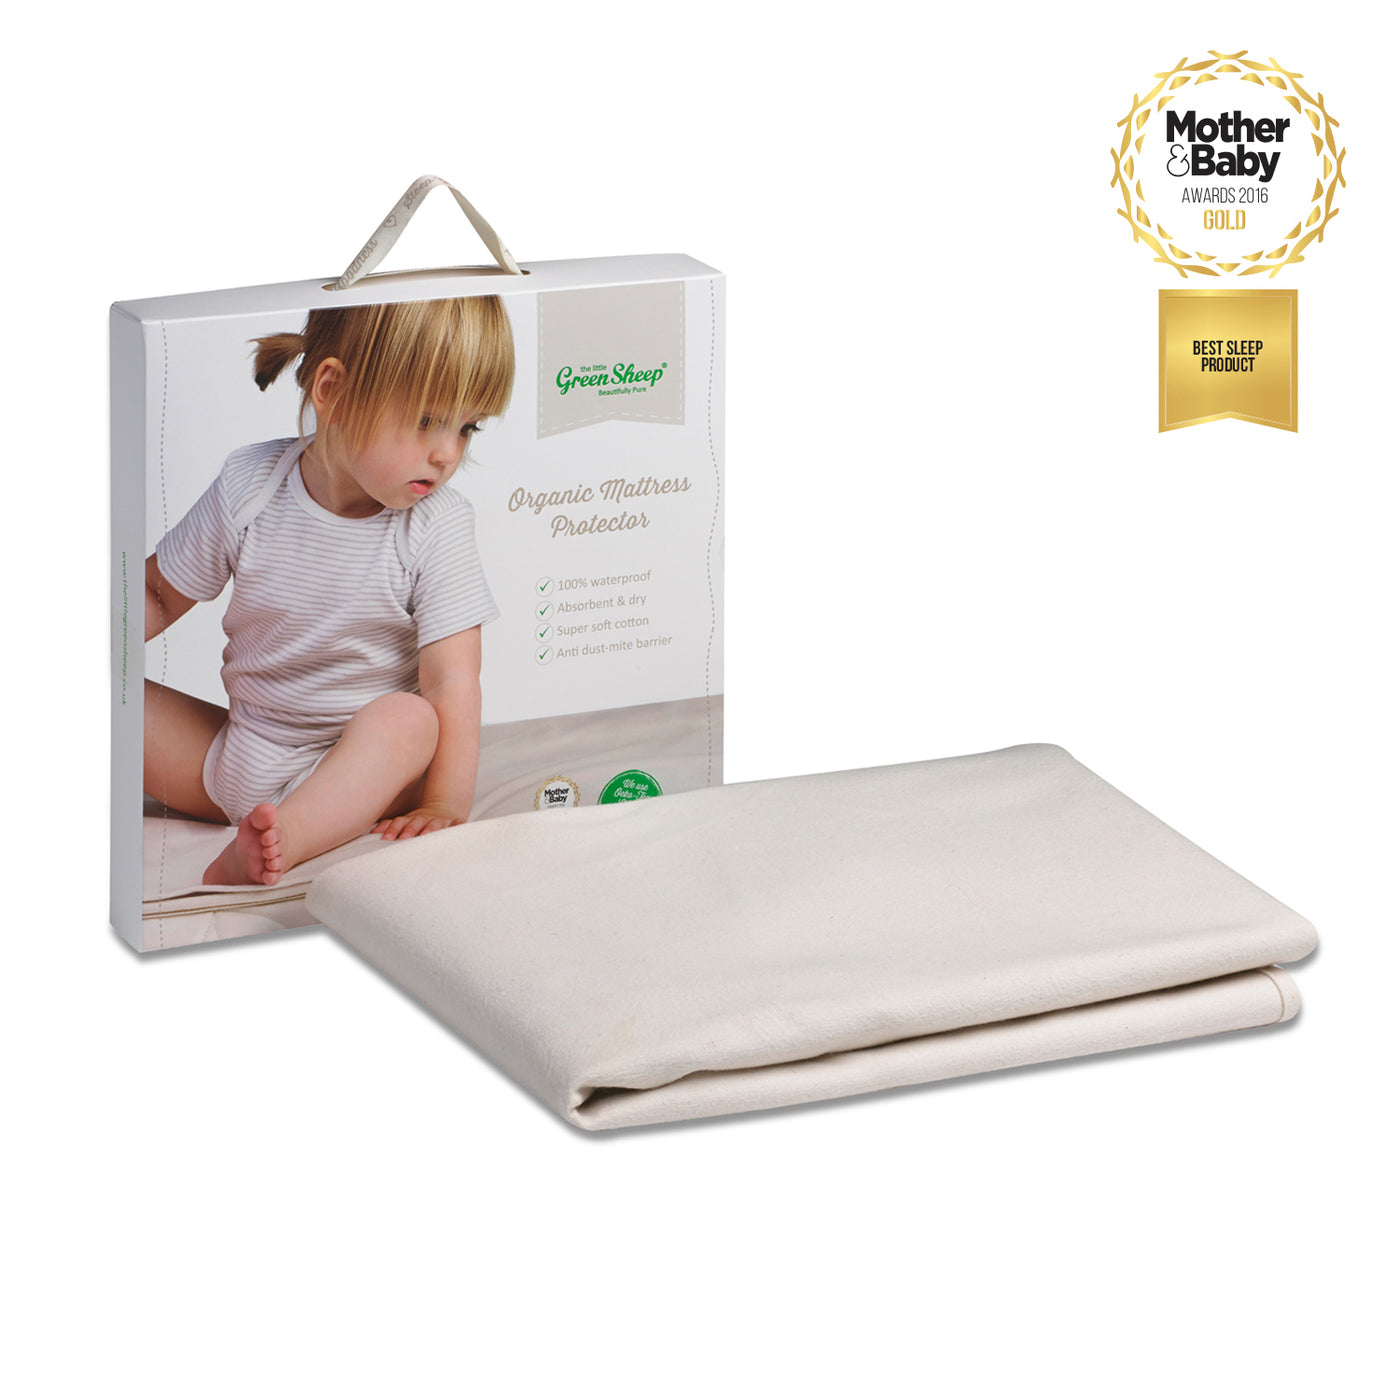 Little Green Sheep Organic Mattress Protector - Stokke Sleepi Bed/Leander Cot